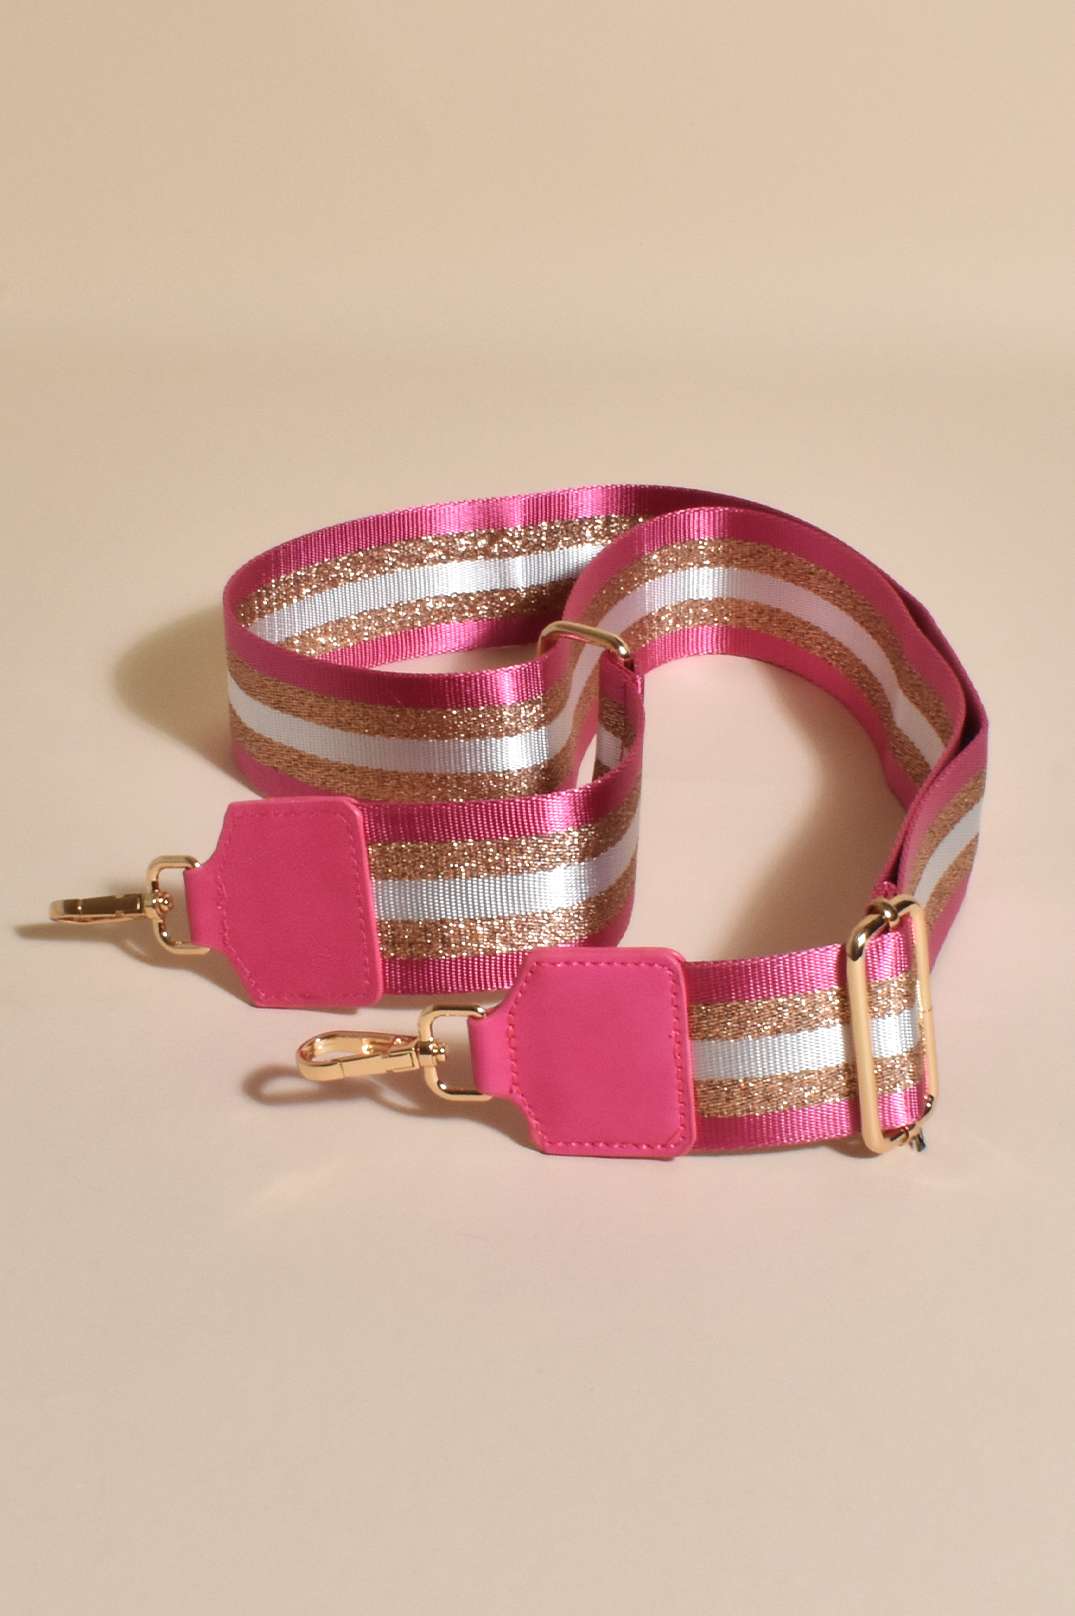 BCBG Girls Pink purse/handbag with Strap, Small to Med., Womens/Girls | eBay